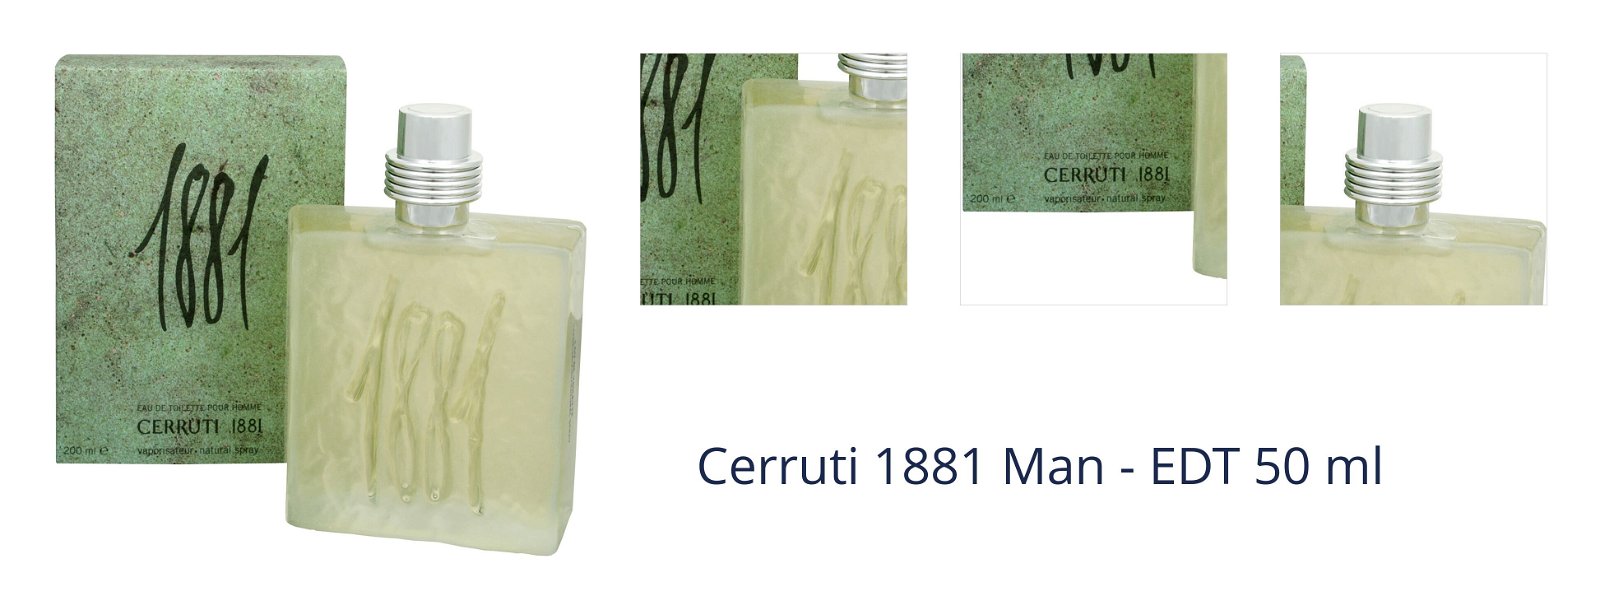 Cerruti 1881 Man - EDT 50 ml 7